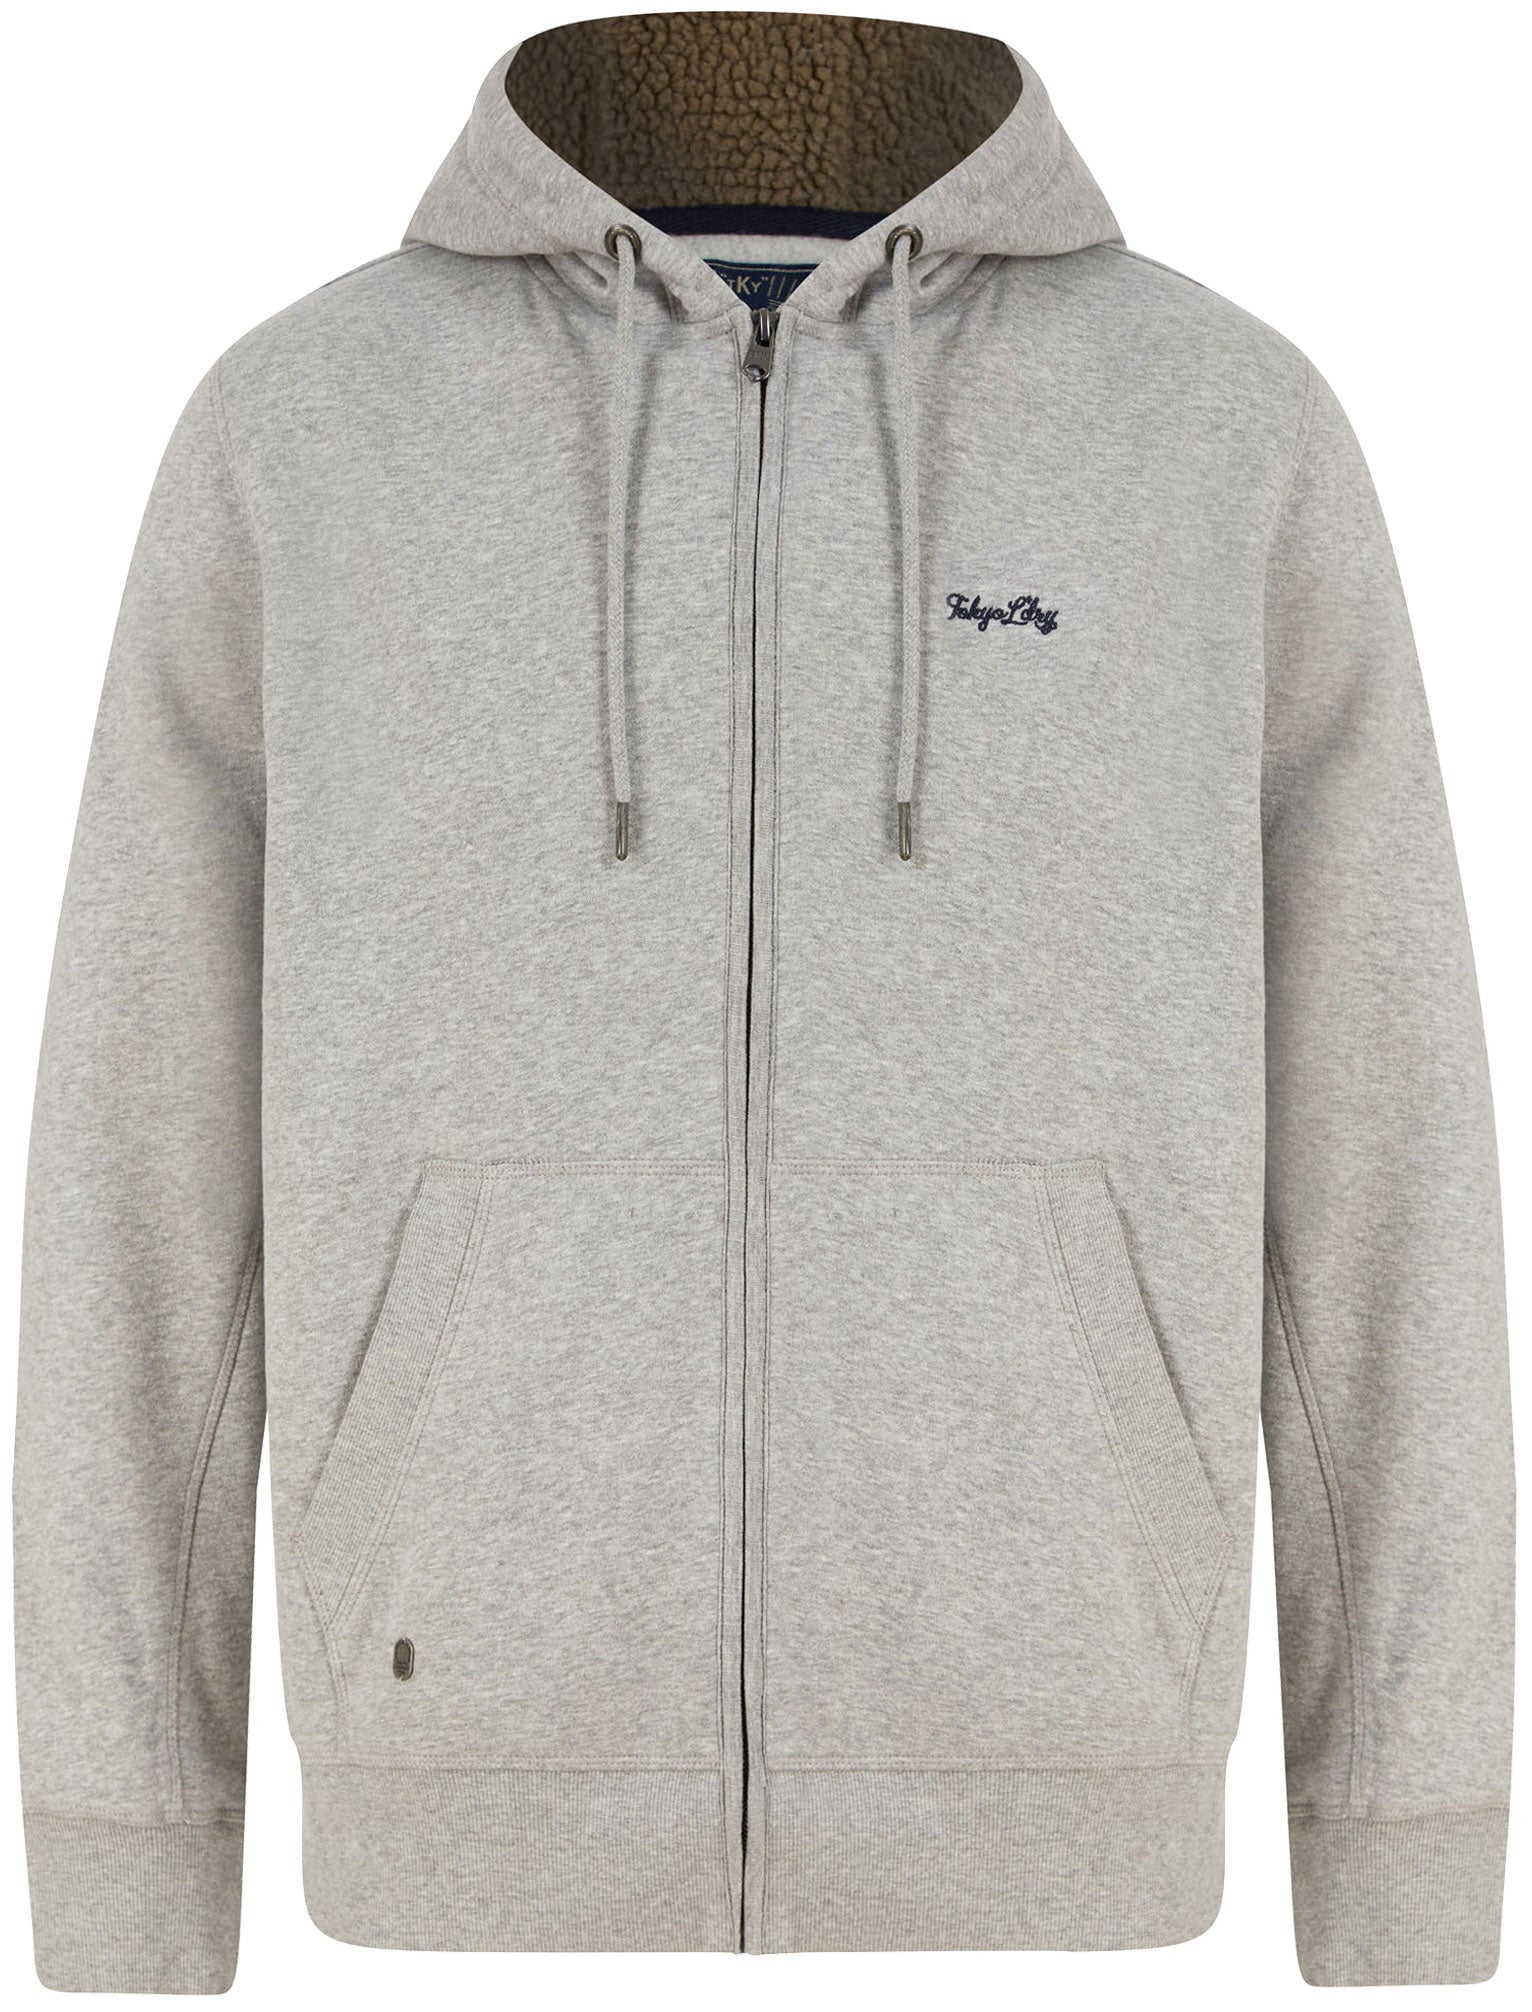 Hoodies / Sweatshirts Descent Basic Zip Through Fleece Hoodie With Borg Lined Hood In Light Grey Marl / S - Tokyo Laundry